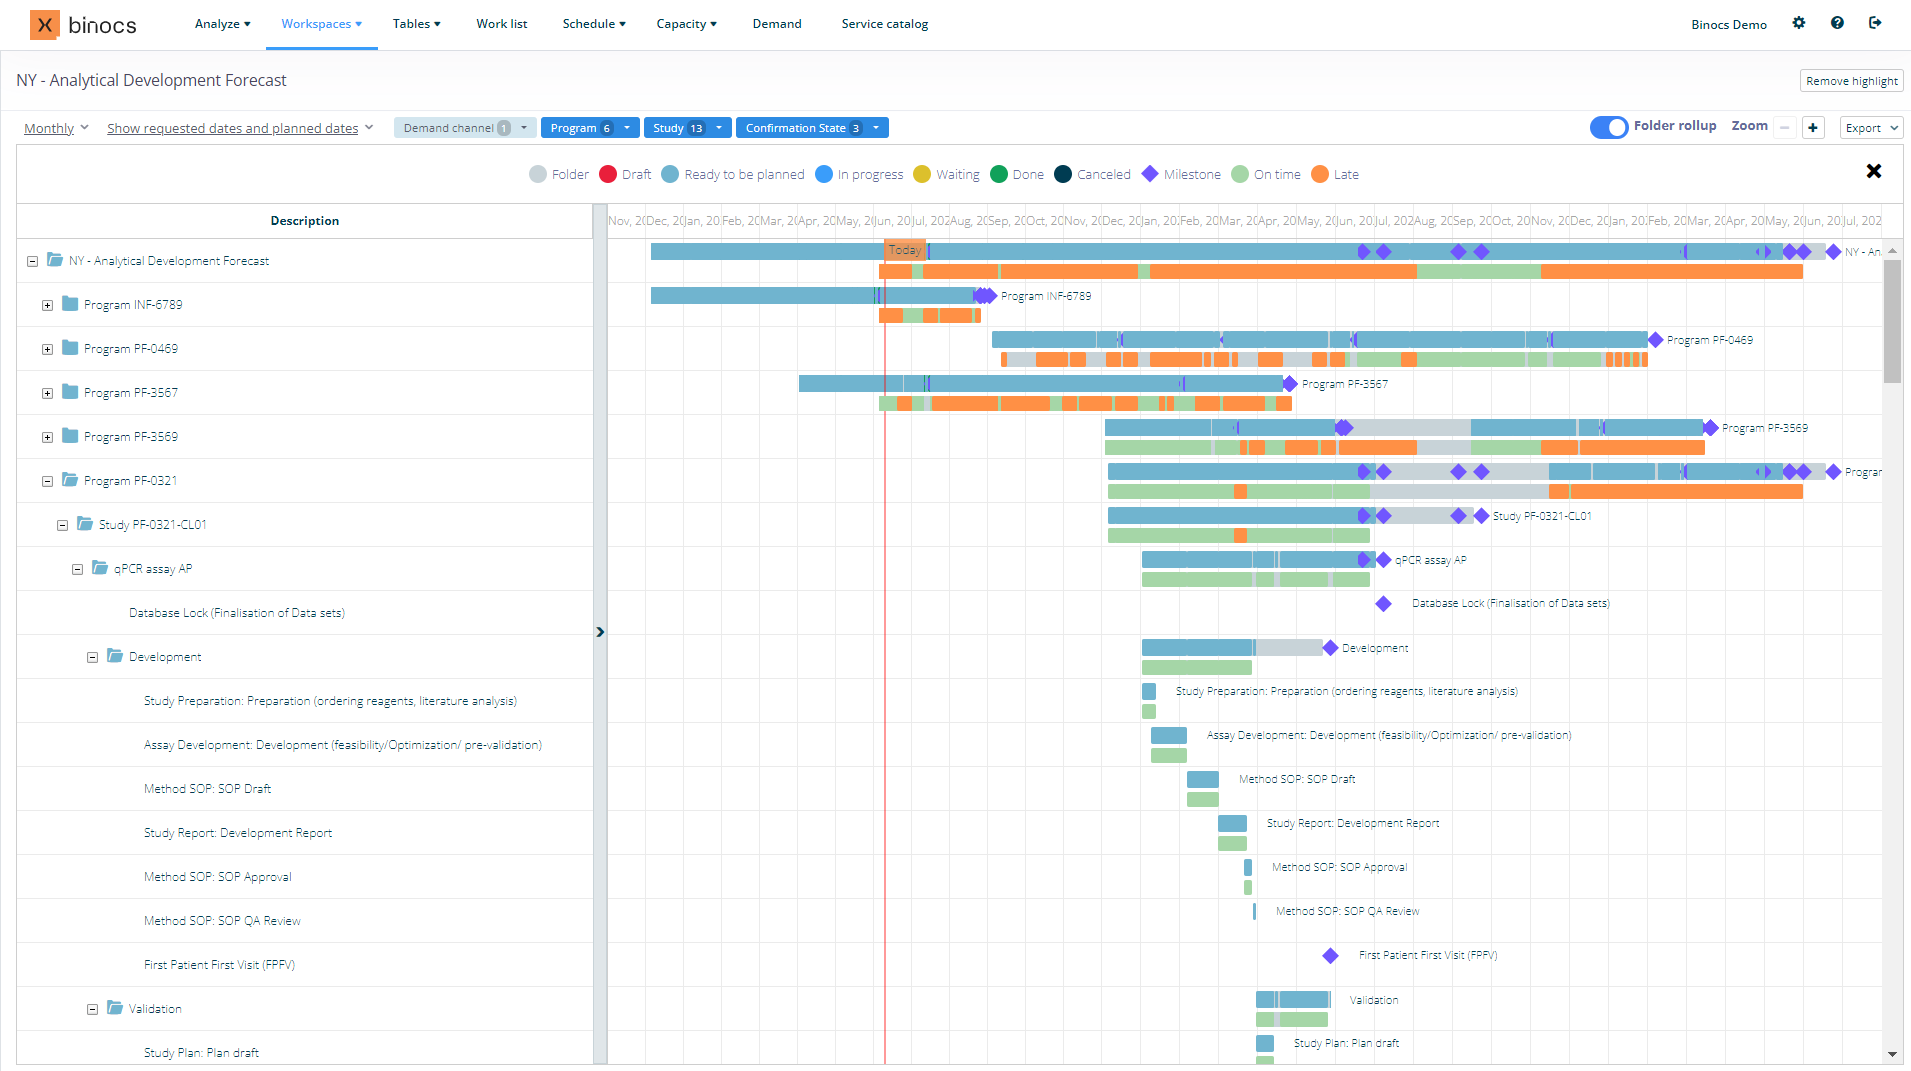 Screenshot of the Binocs Gantt chart displaying a complex project plan